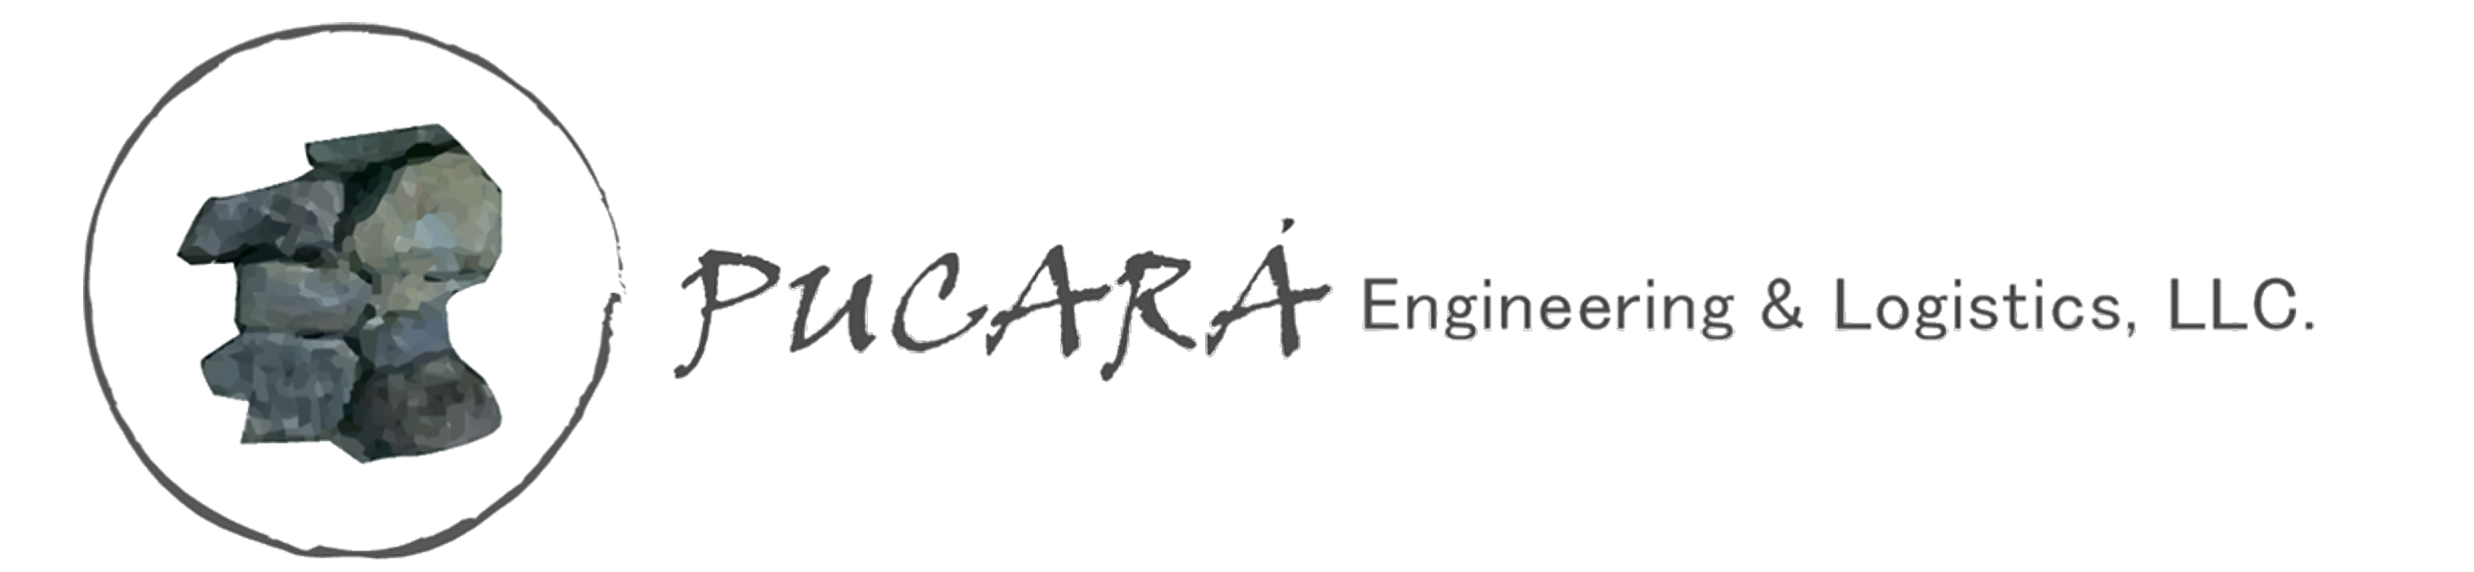 Pucara Engineering & Logistics, LLC.